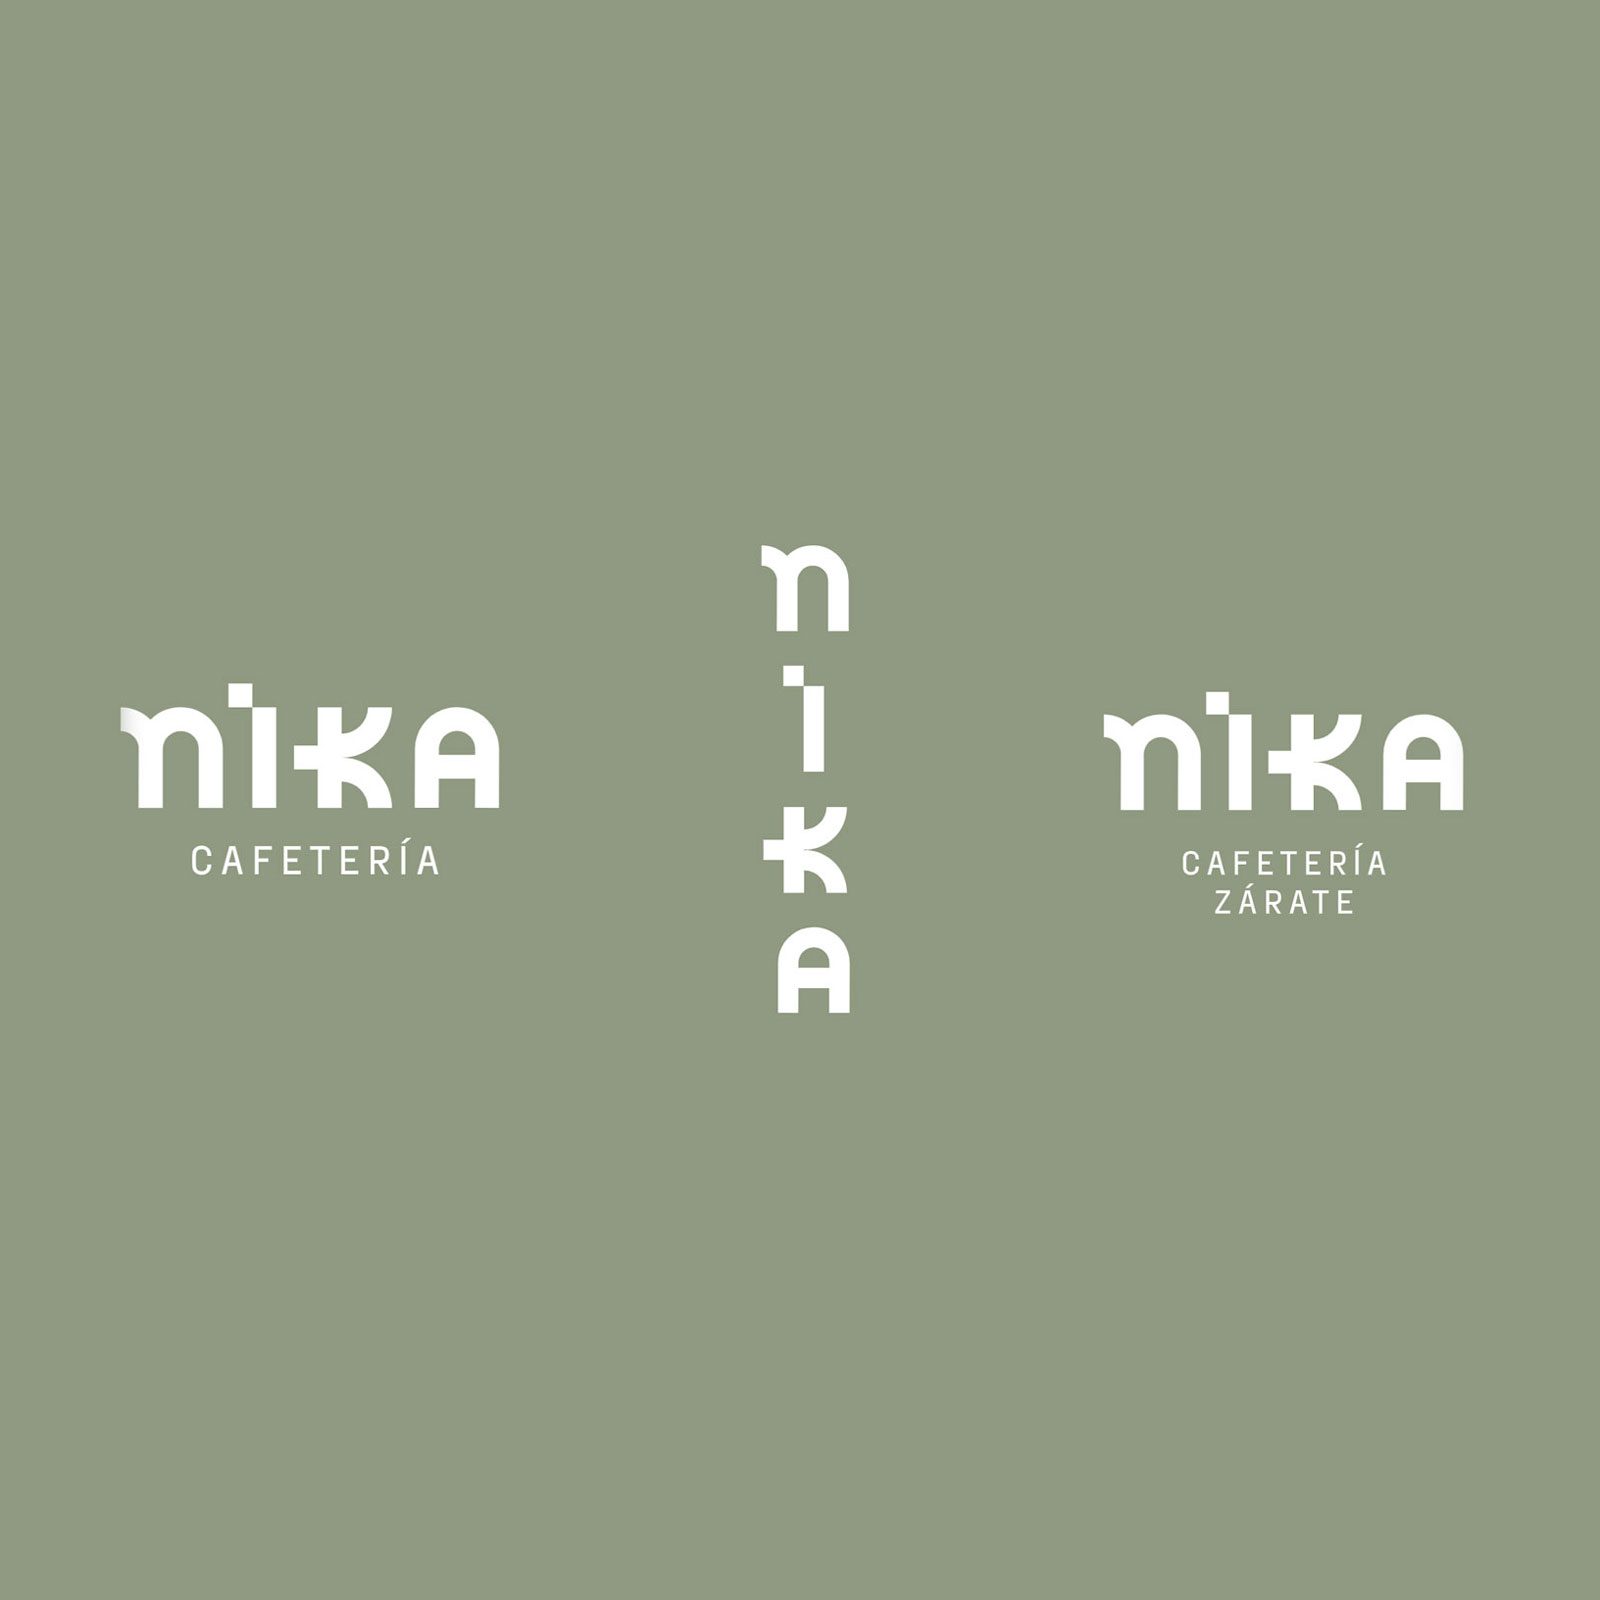 Nika logo variations